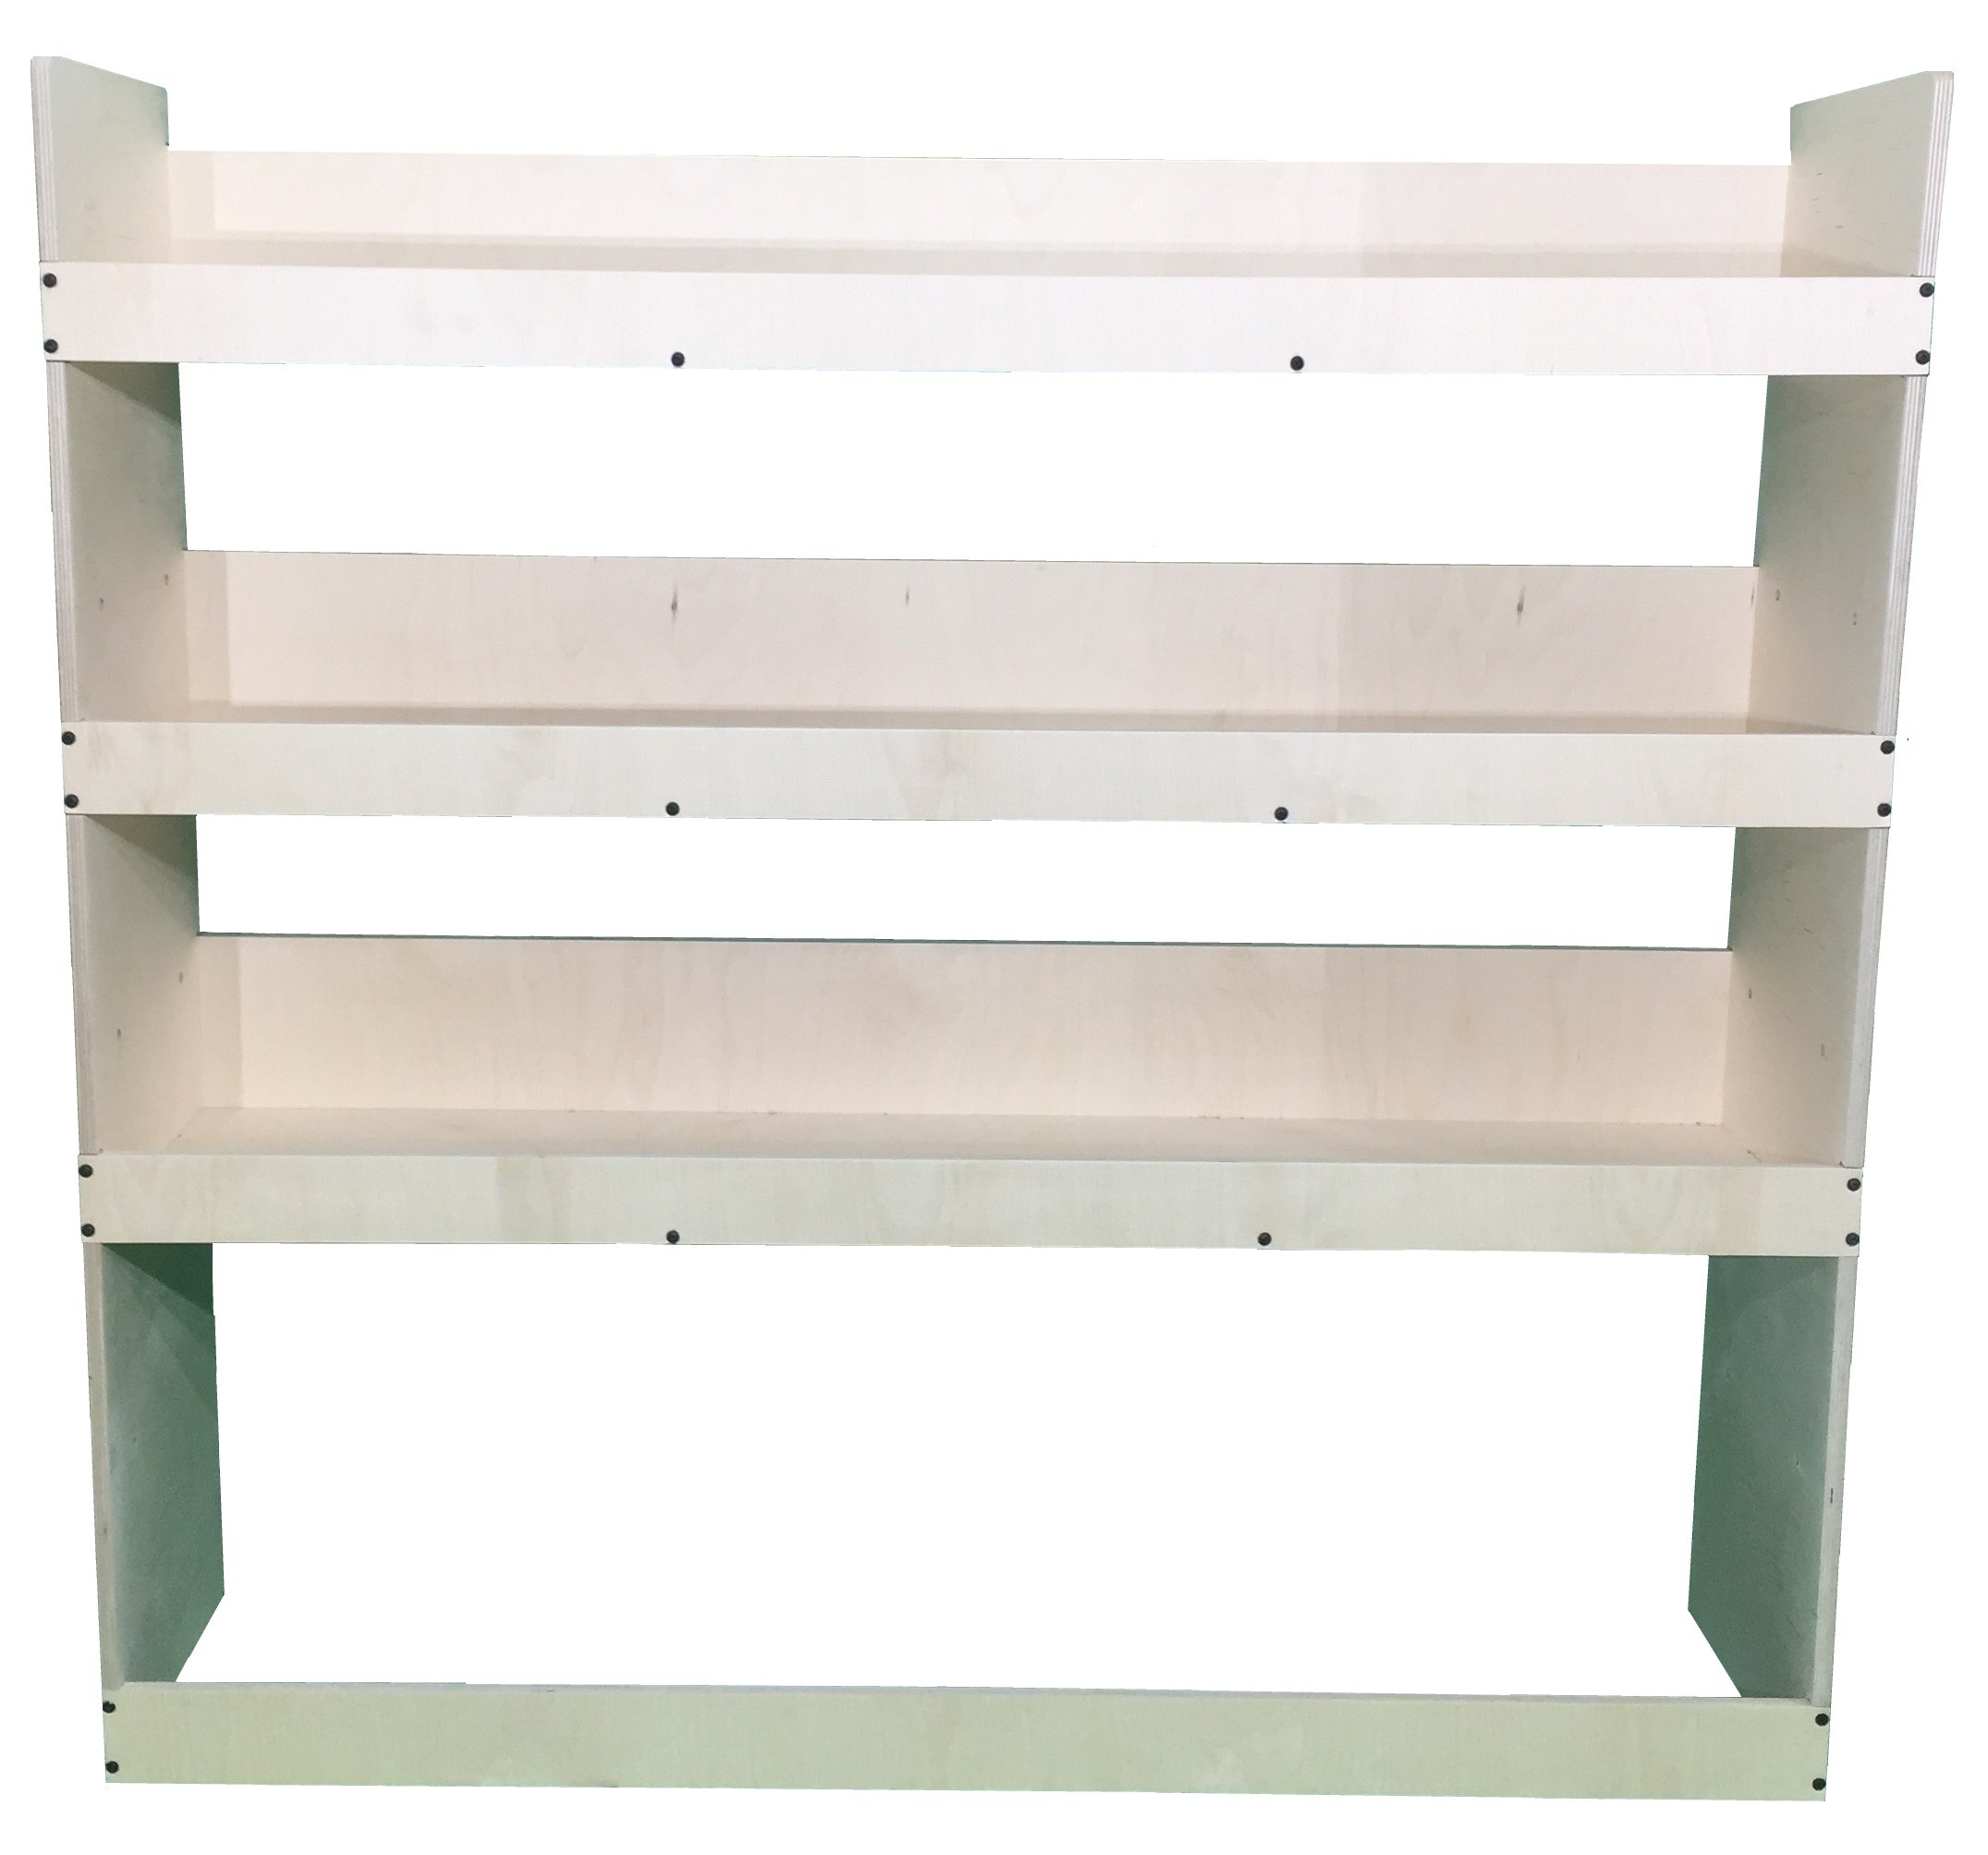 High Quality Birch Van Plywood Shelving and Racking System 1180mm(H) x 1200mm(W) x 269mm(D) - EC121